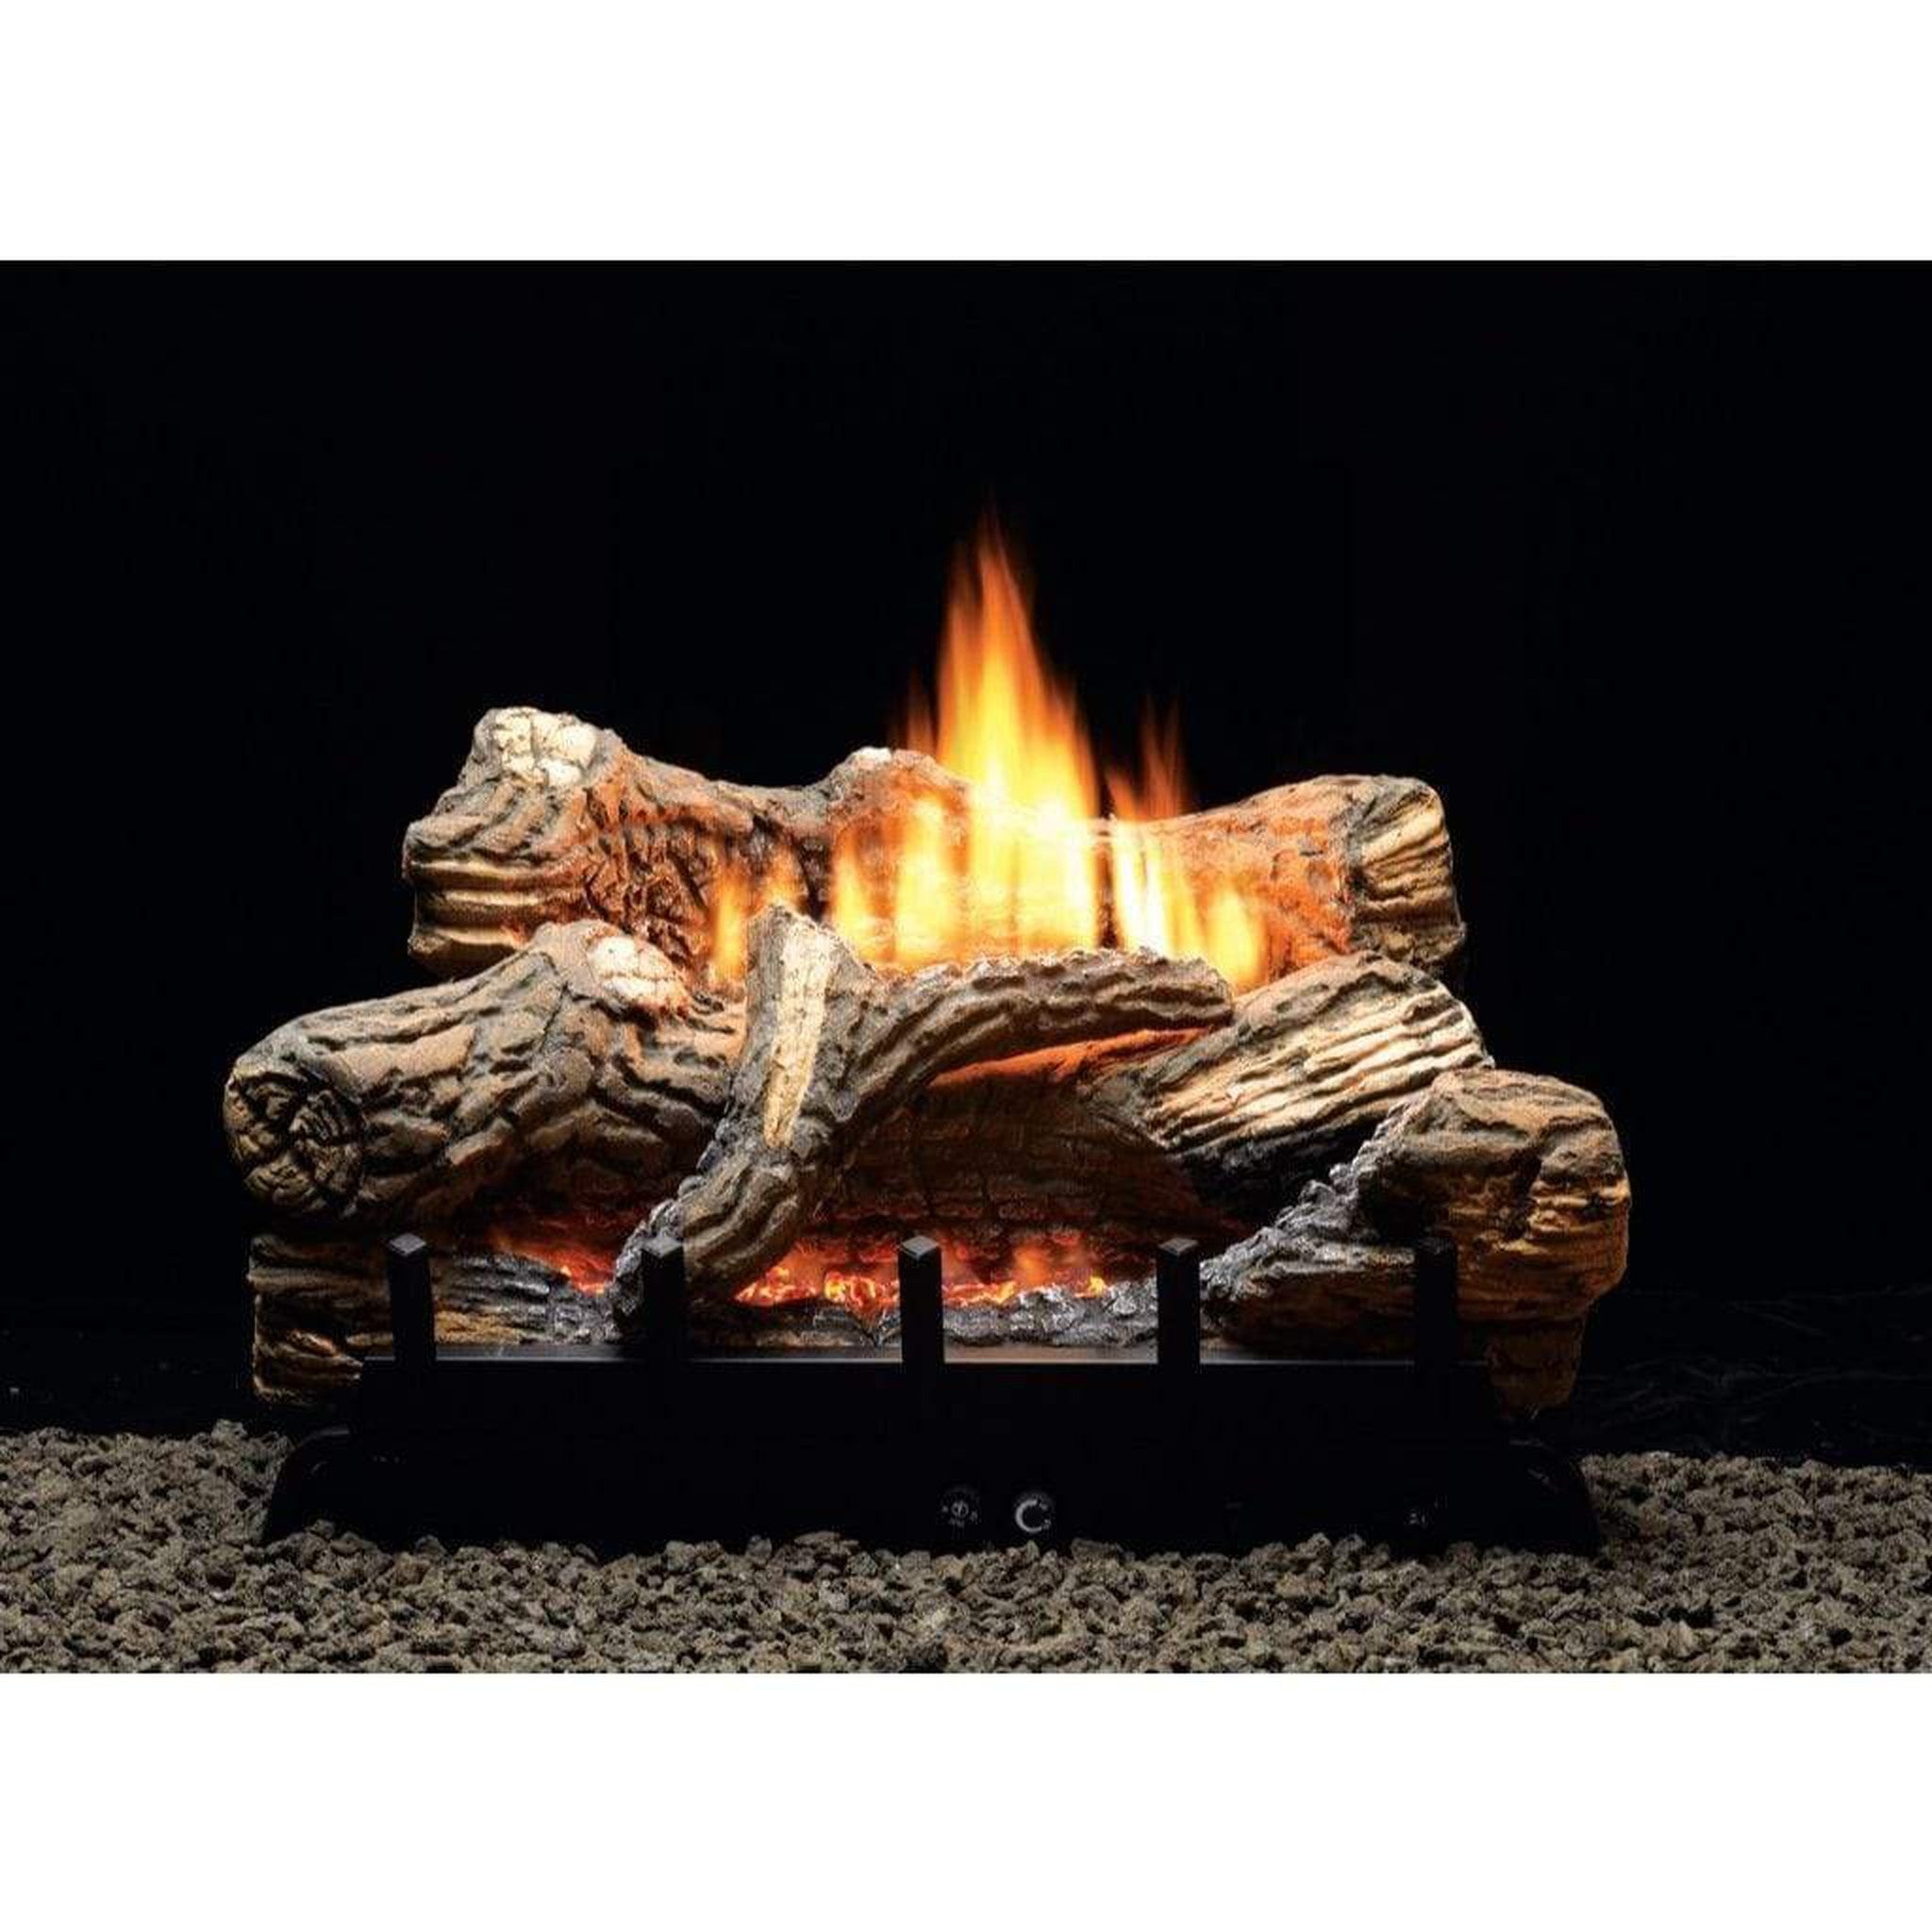 Fireplace Heat Reflectors - Chapel Hill NC - Burlington NC - Fire Safe